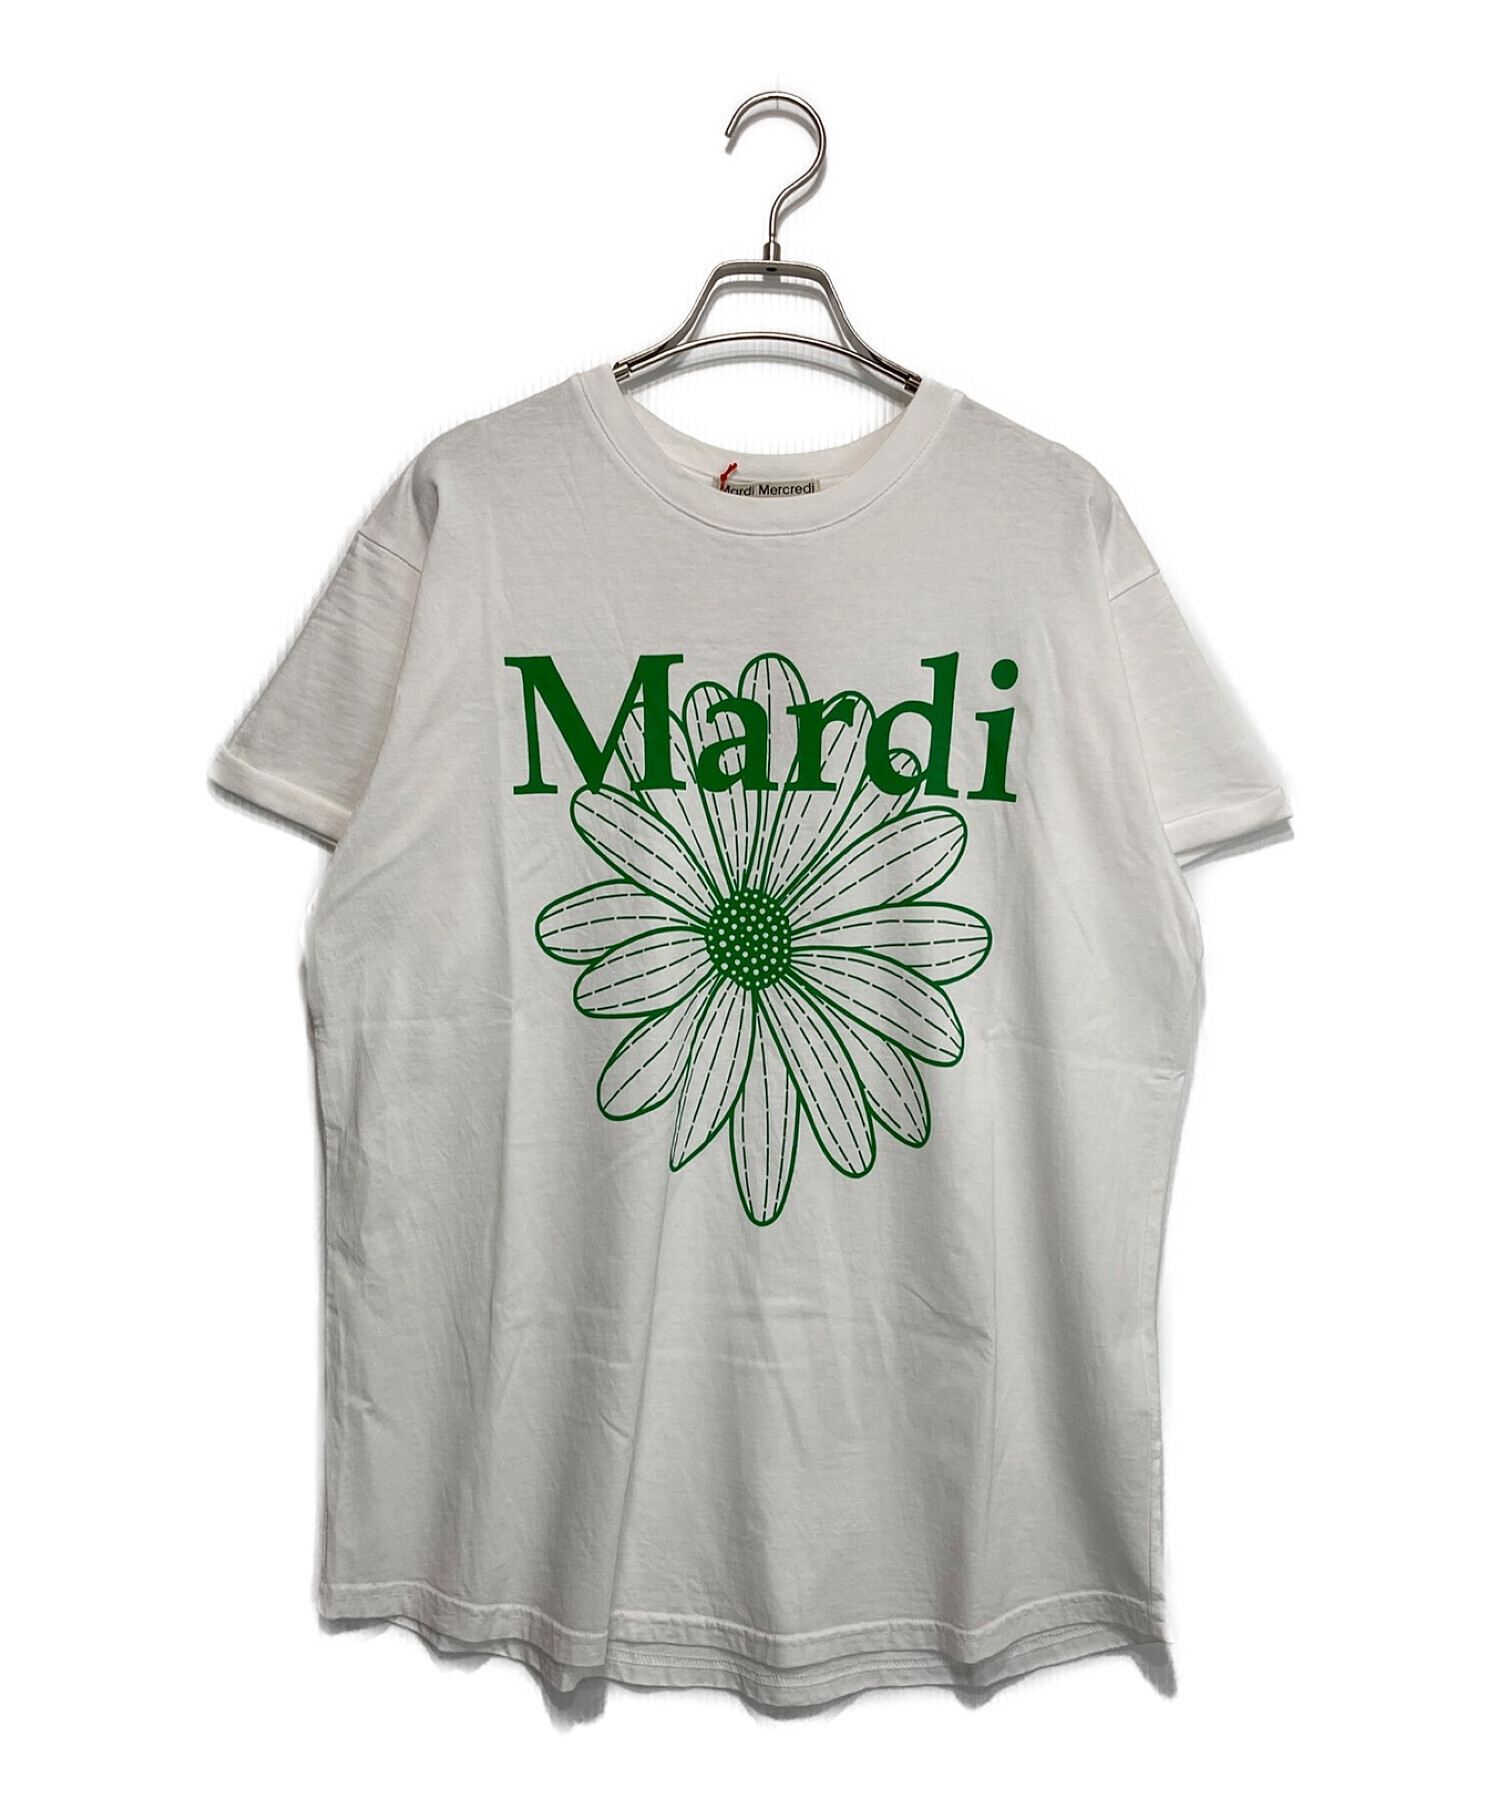 mardi mercredi (マルディメクルディ) プリントTシャツ ホワイト サイズ:F